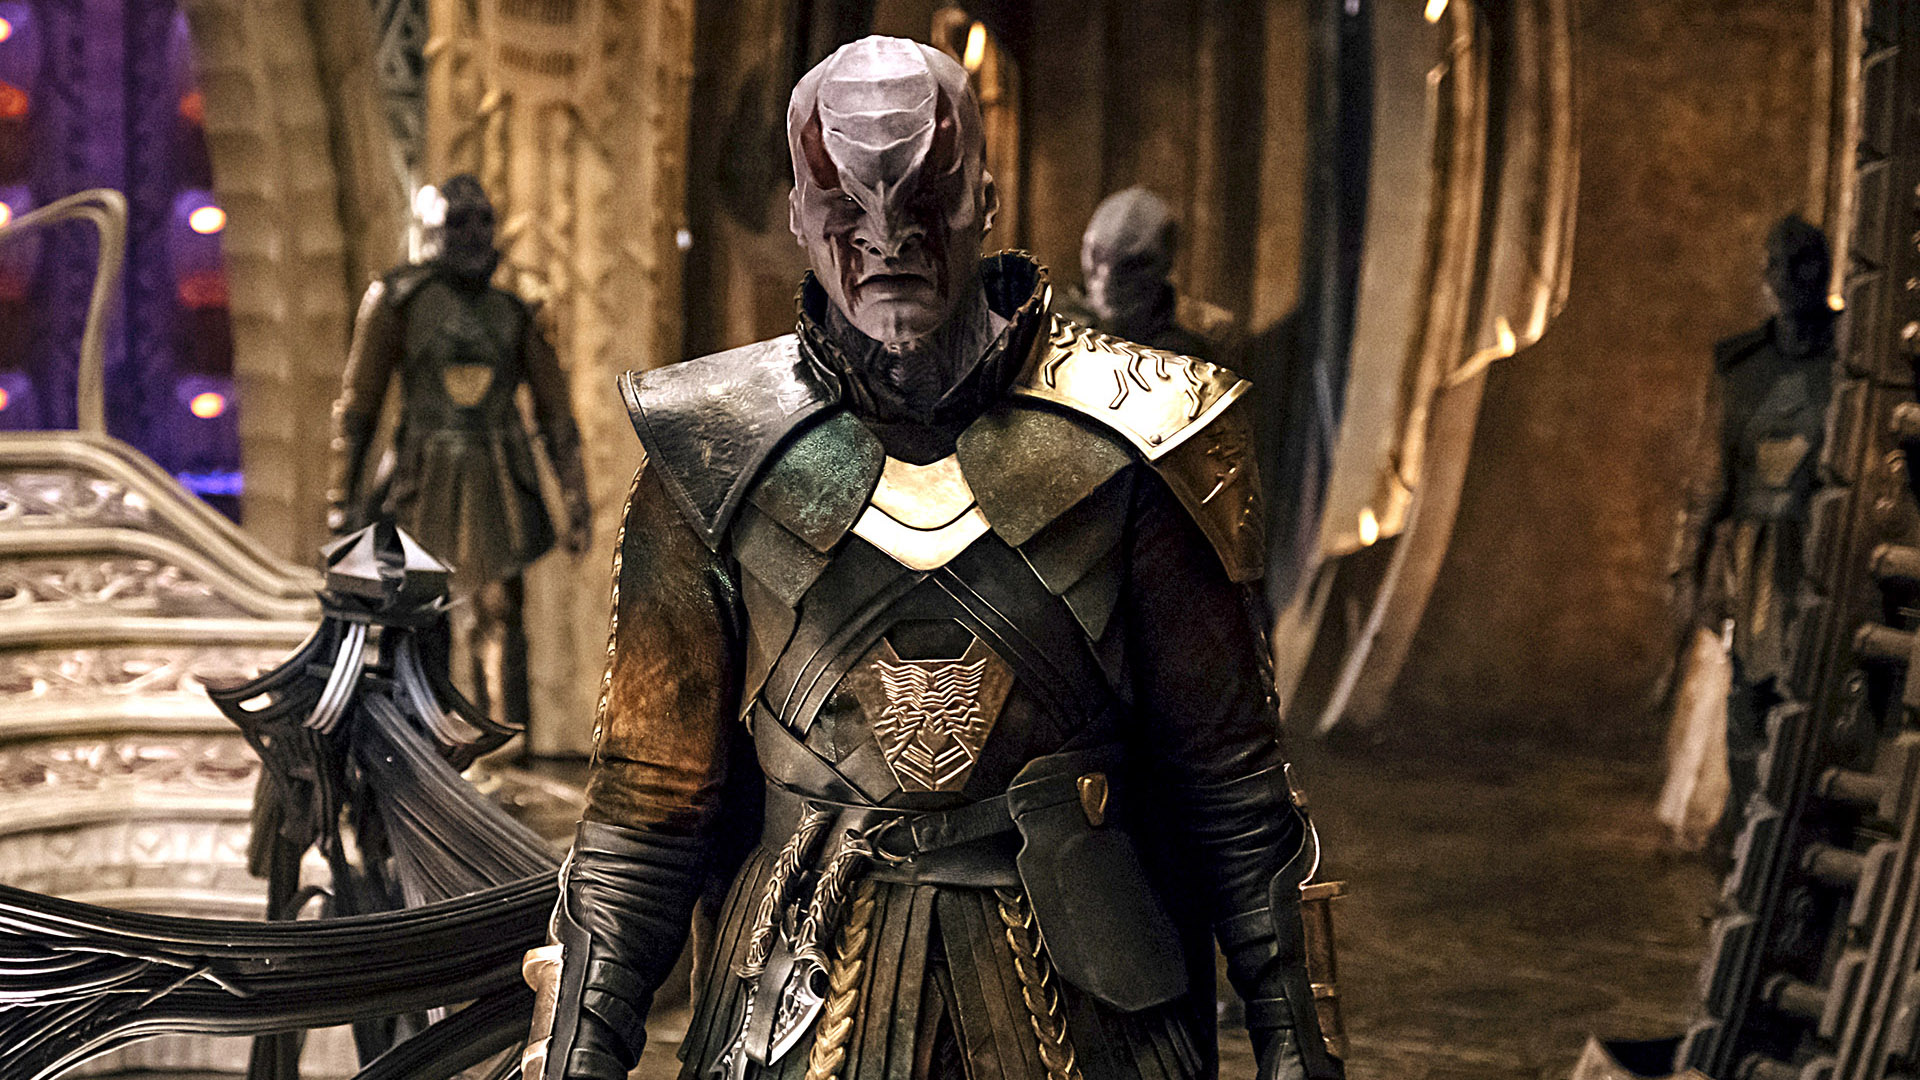 Kol (Kenneth Mitchell) and Klingon warriors